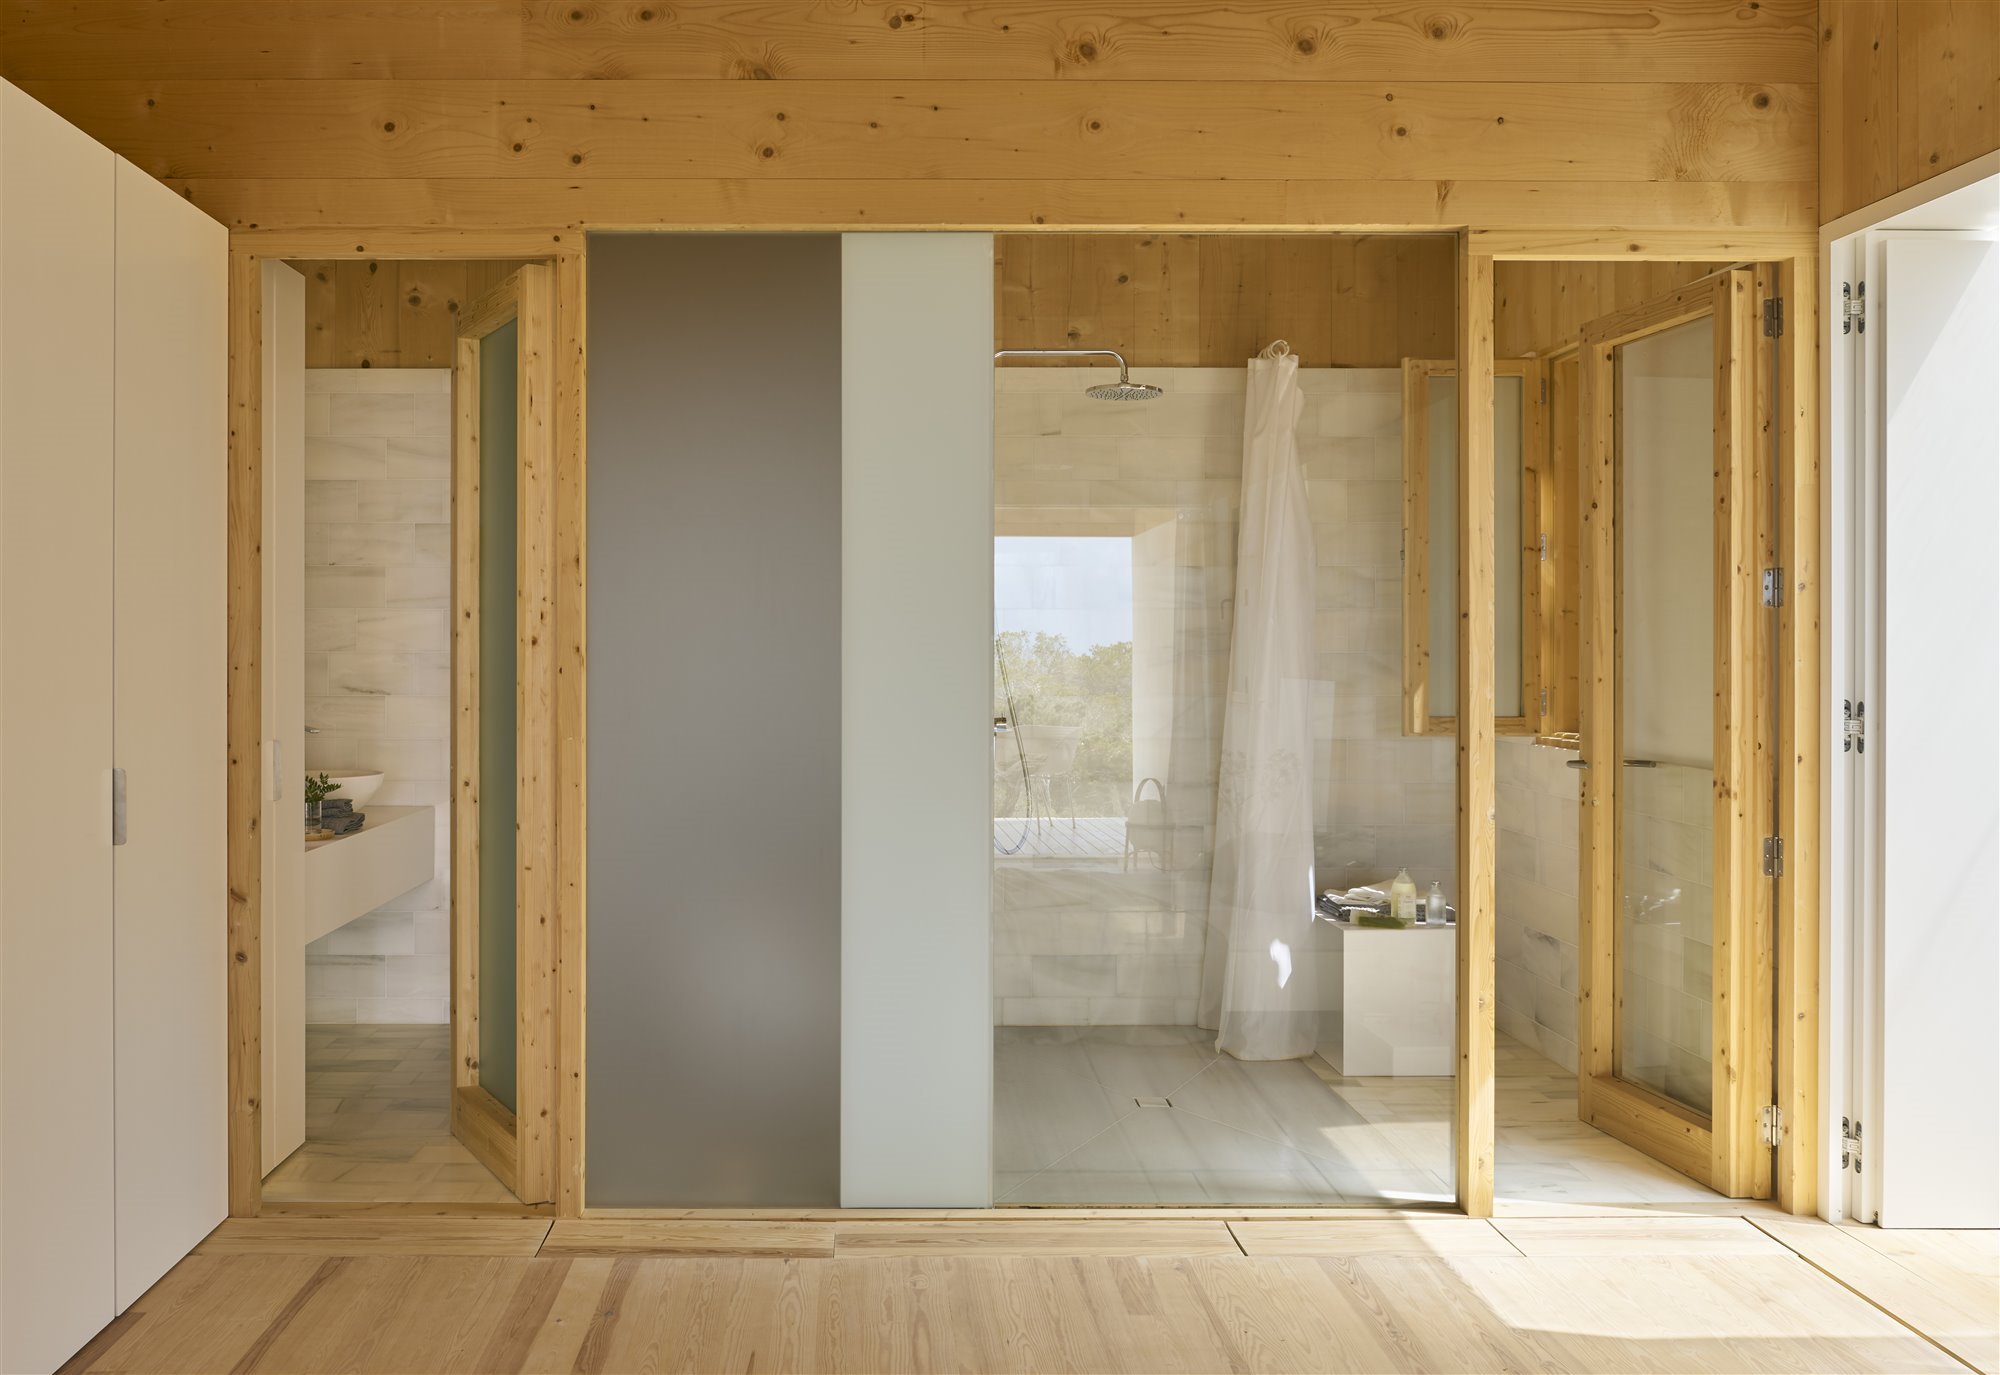 Ban~o moderno con ducha y madera